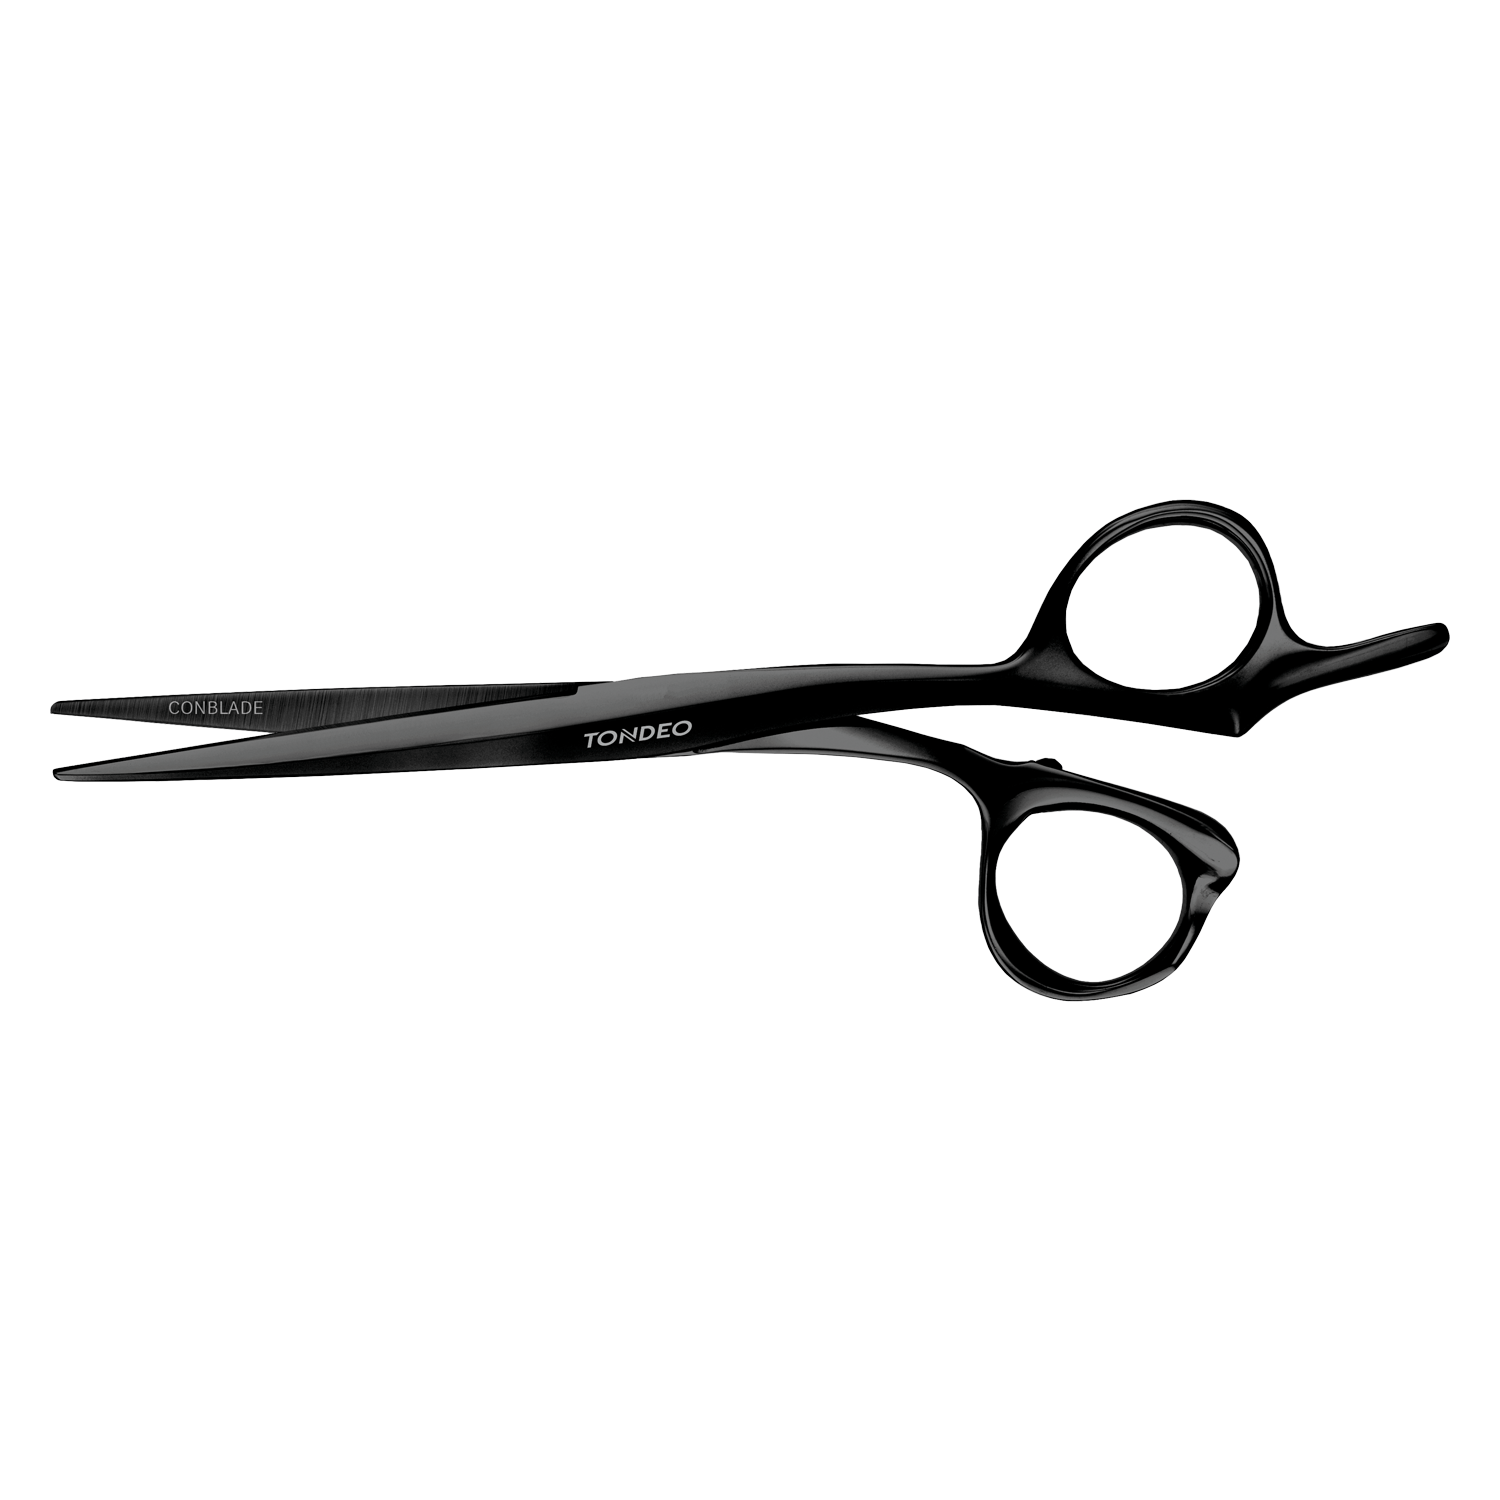 Produktbild von Tondeo Scissors - Zentao Black Offset Scissors 5.5" CONBLADE